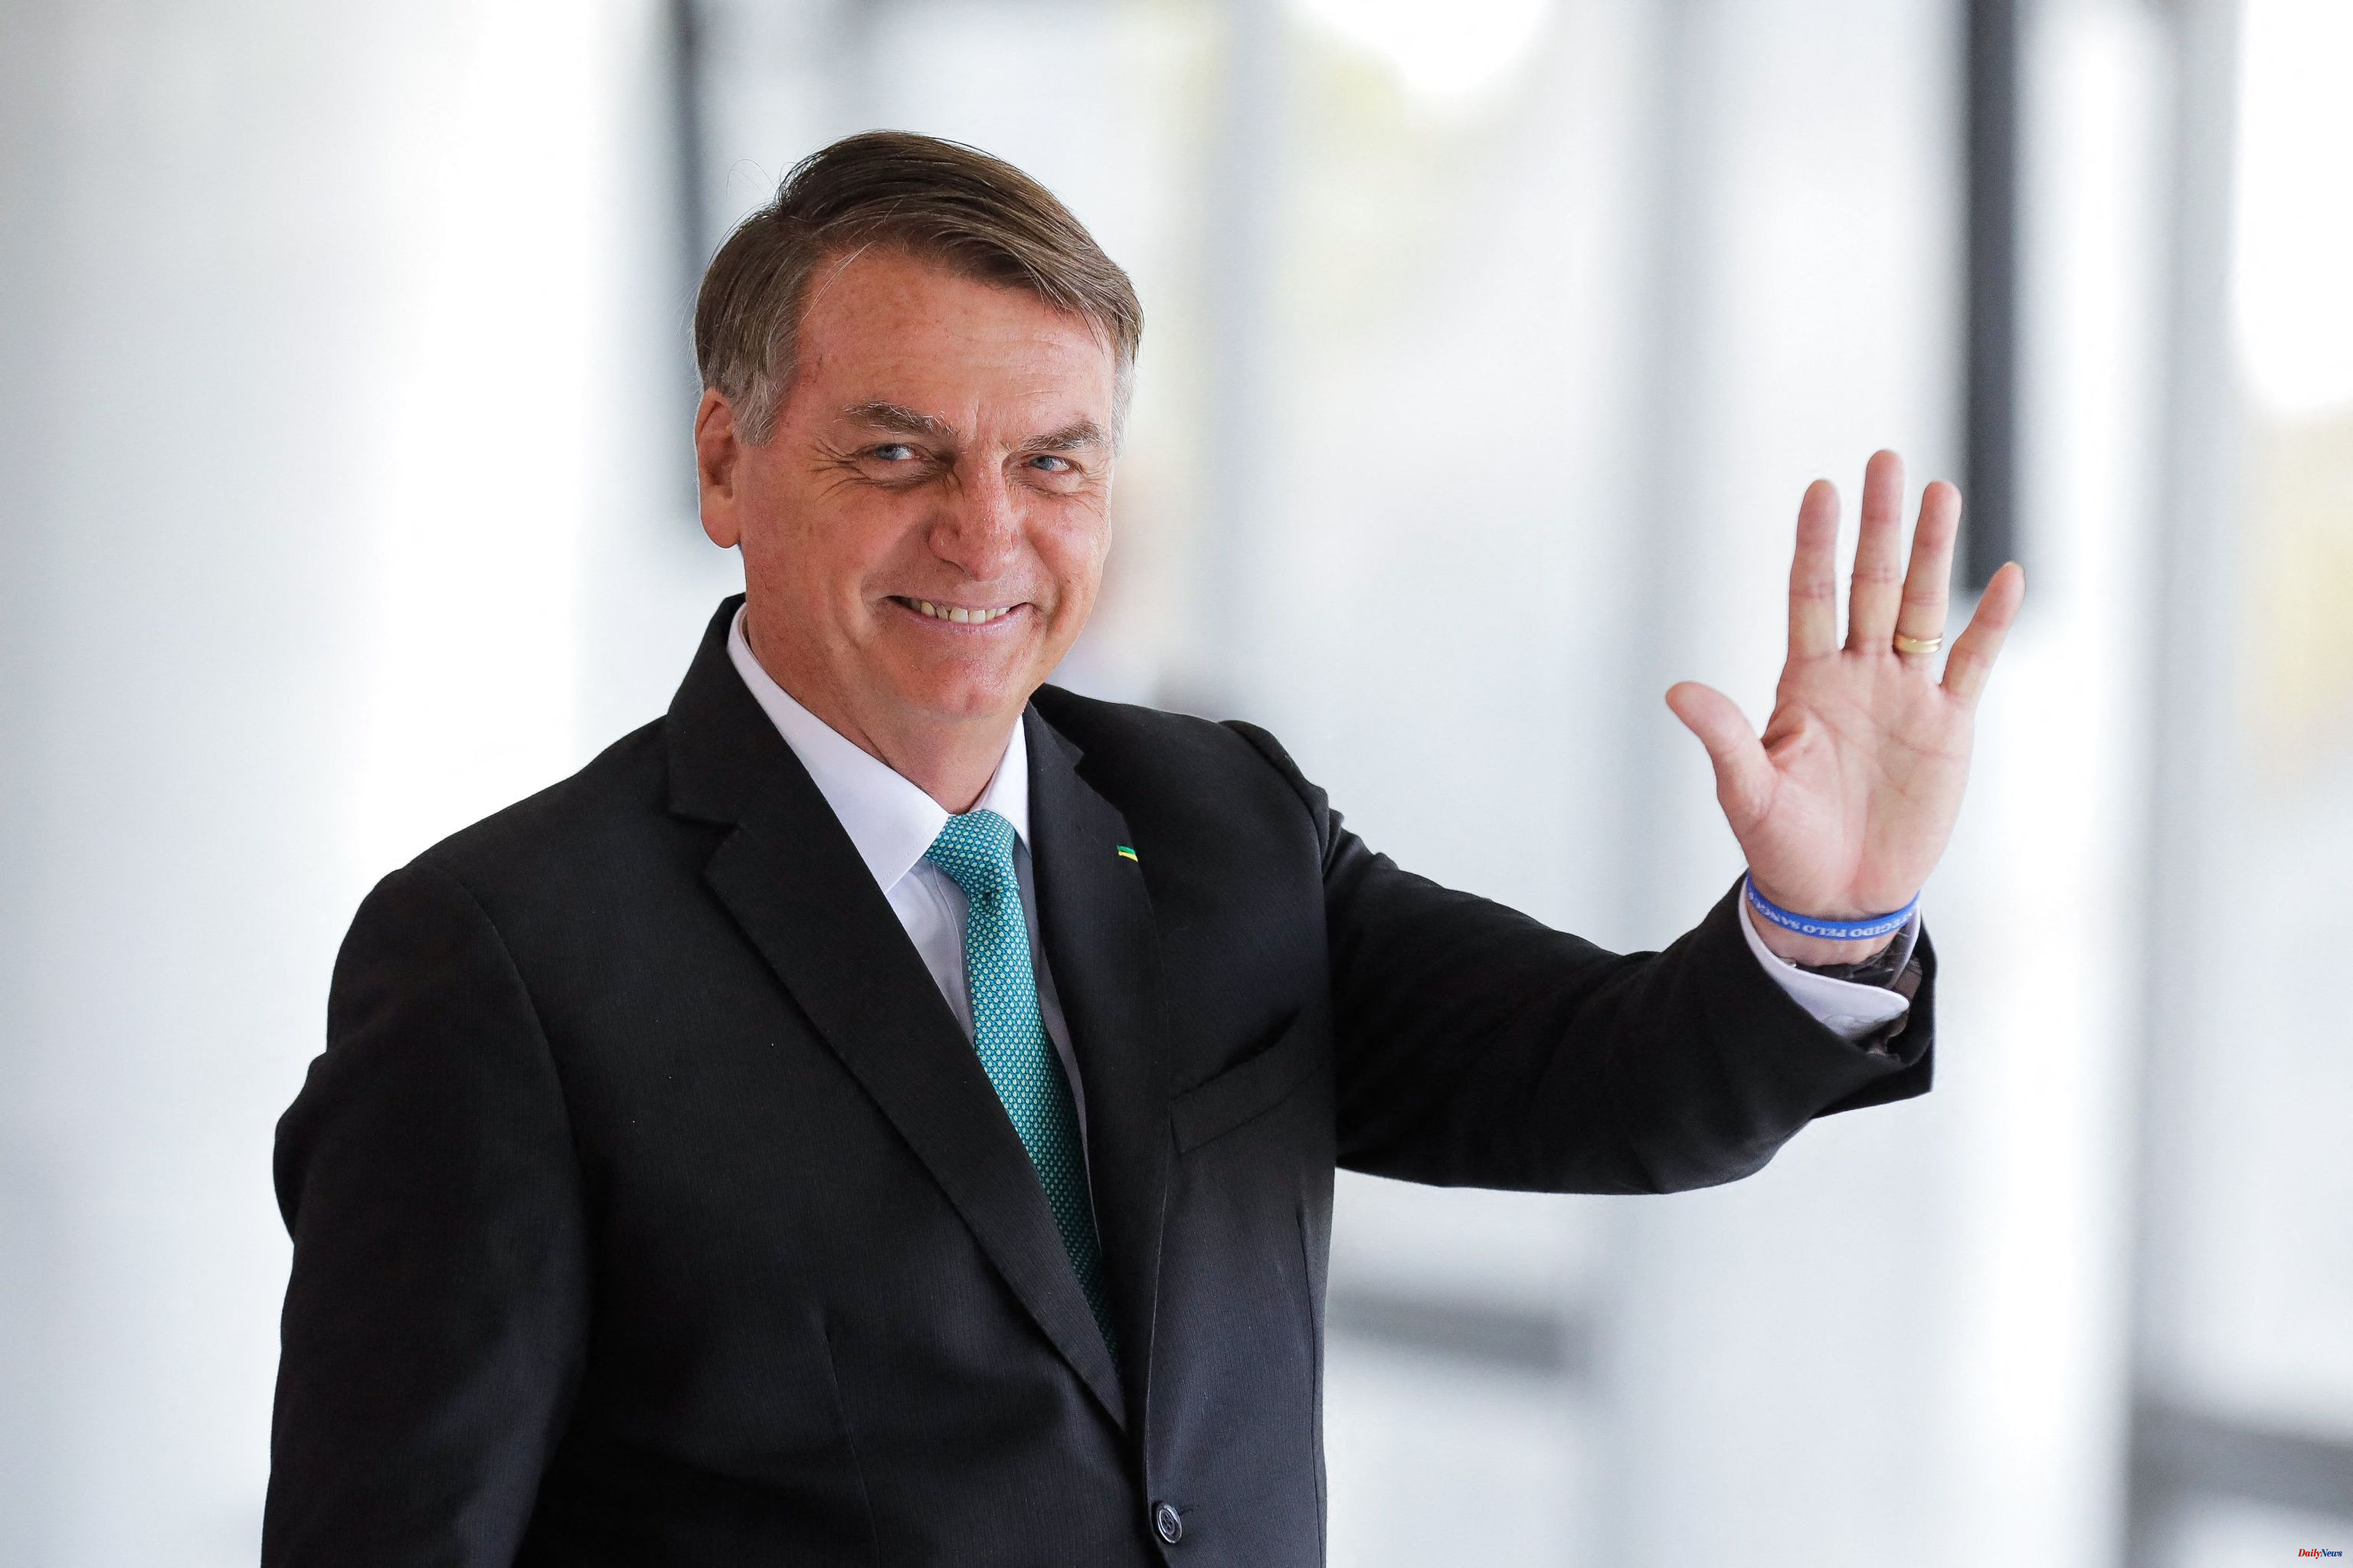 América Bolsonaro announces his return to Brazil and Justice already anticipates problems for him